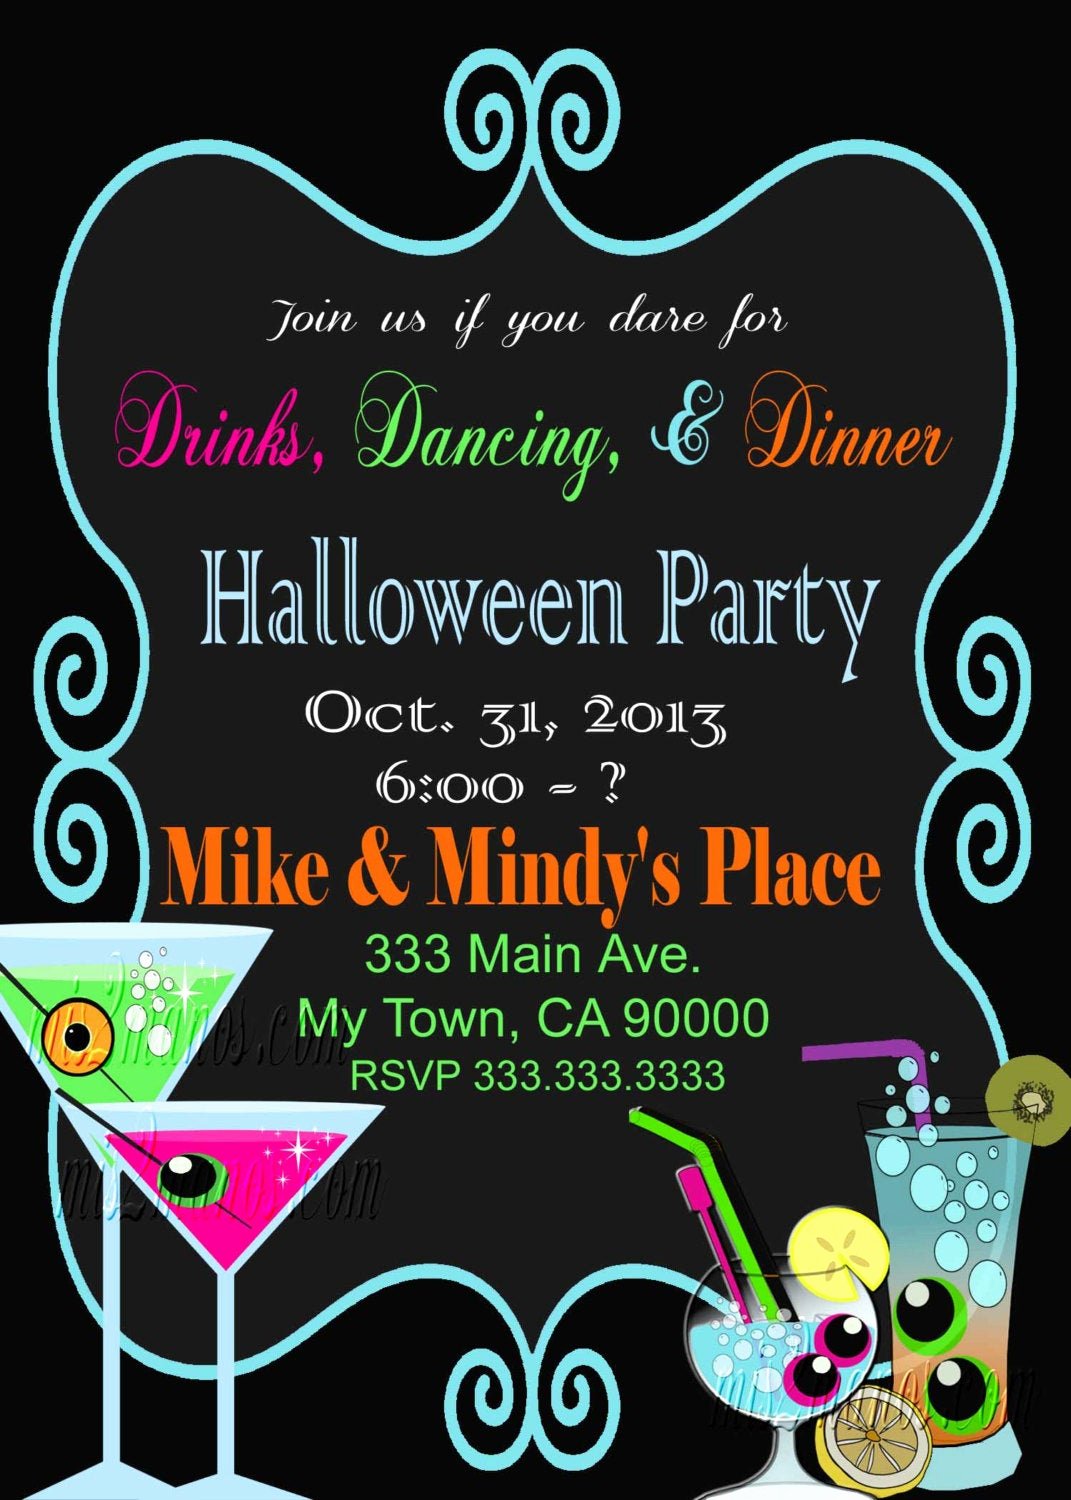 Halloween Birthday Party Invitations Inspirational Halloween Party Invitation Fice Party Birthday Party